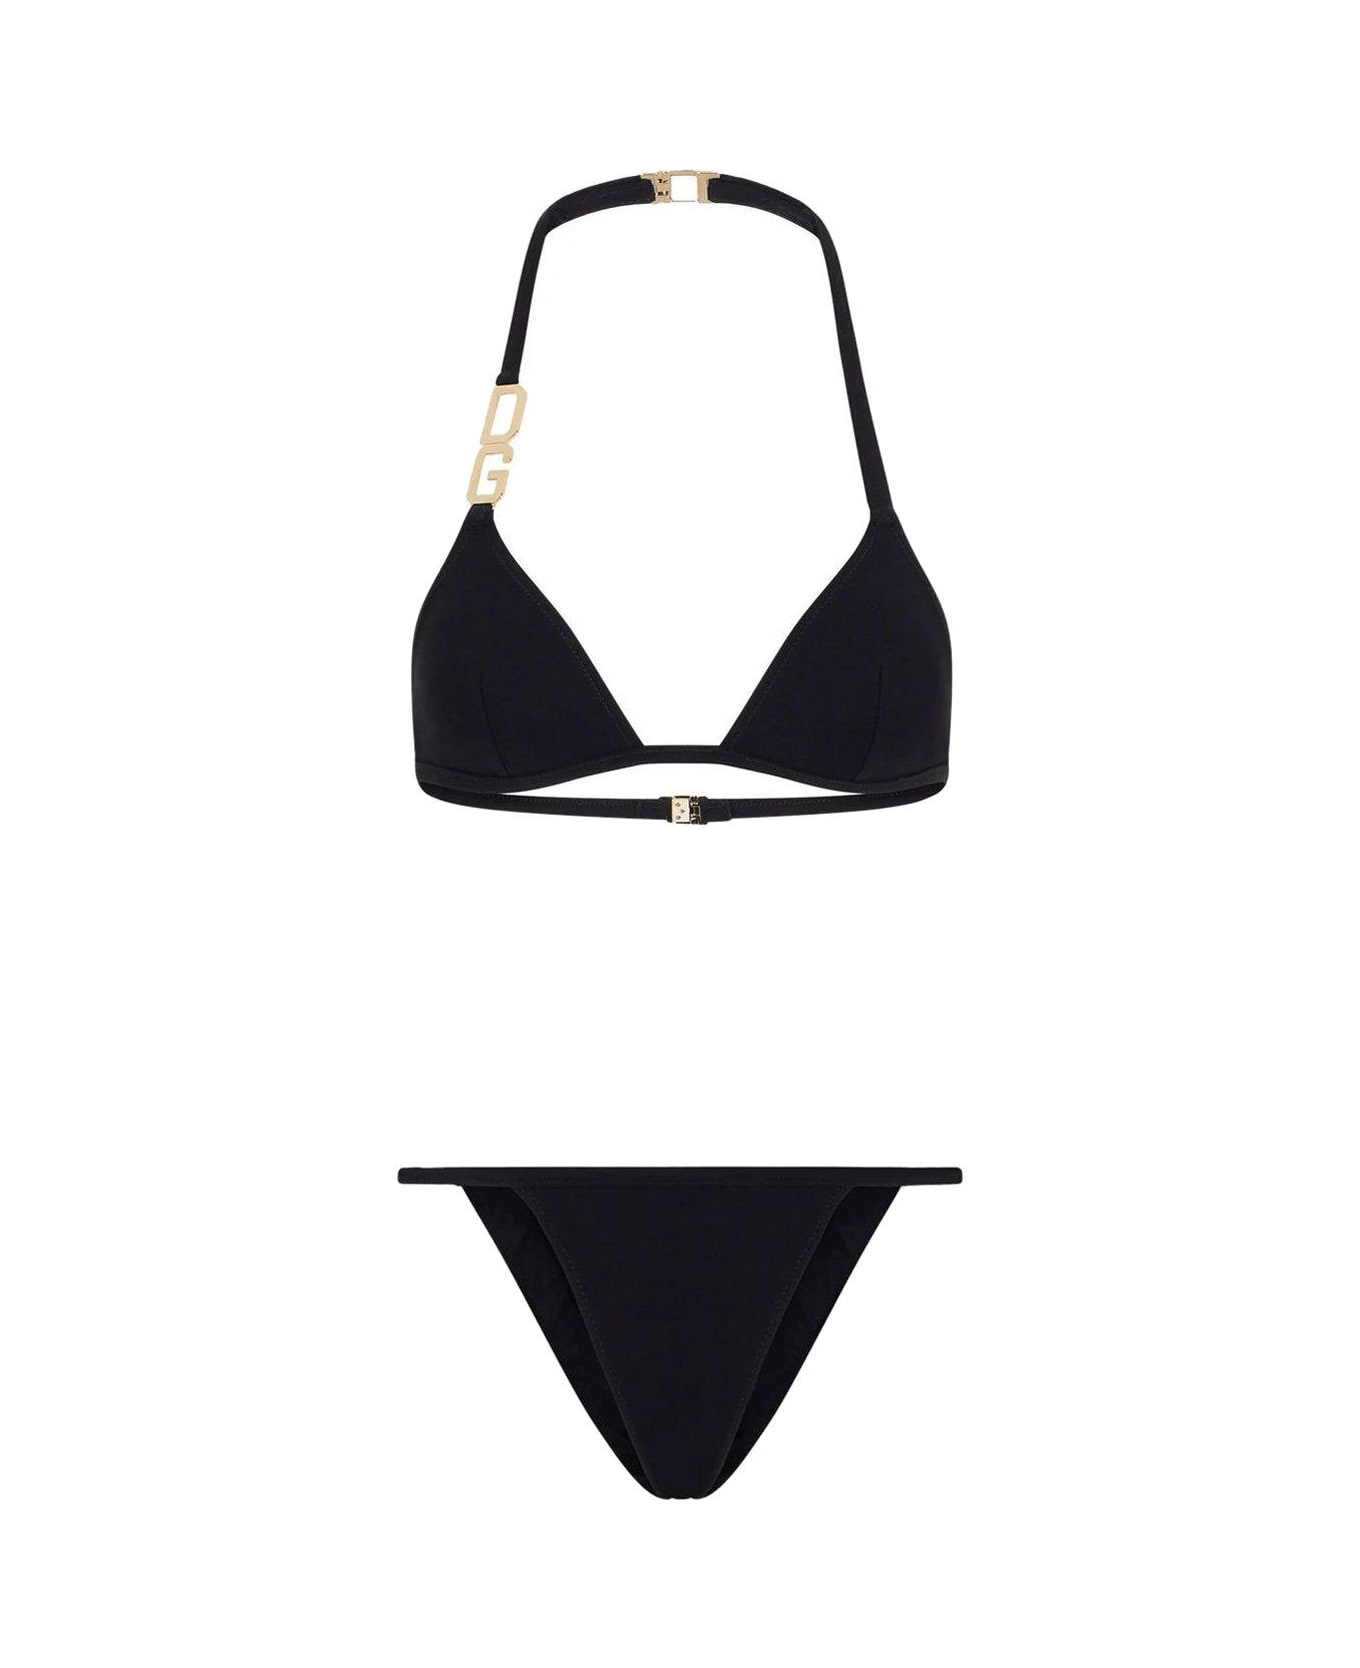 Dolce & Gabbana Dg Plaque Triangle Bikini Set - BLACK